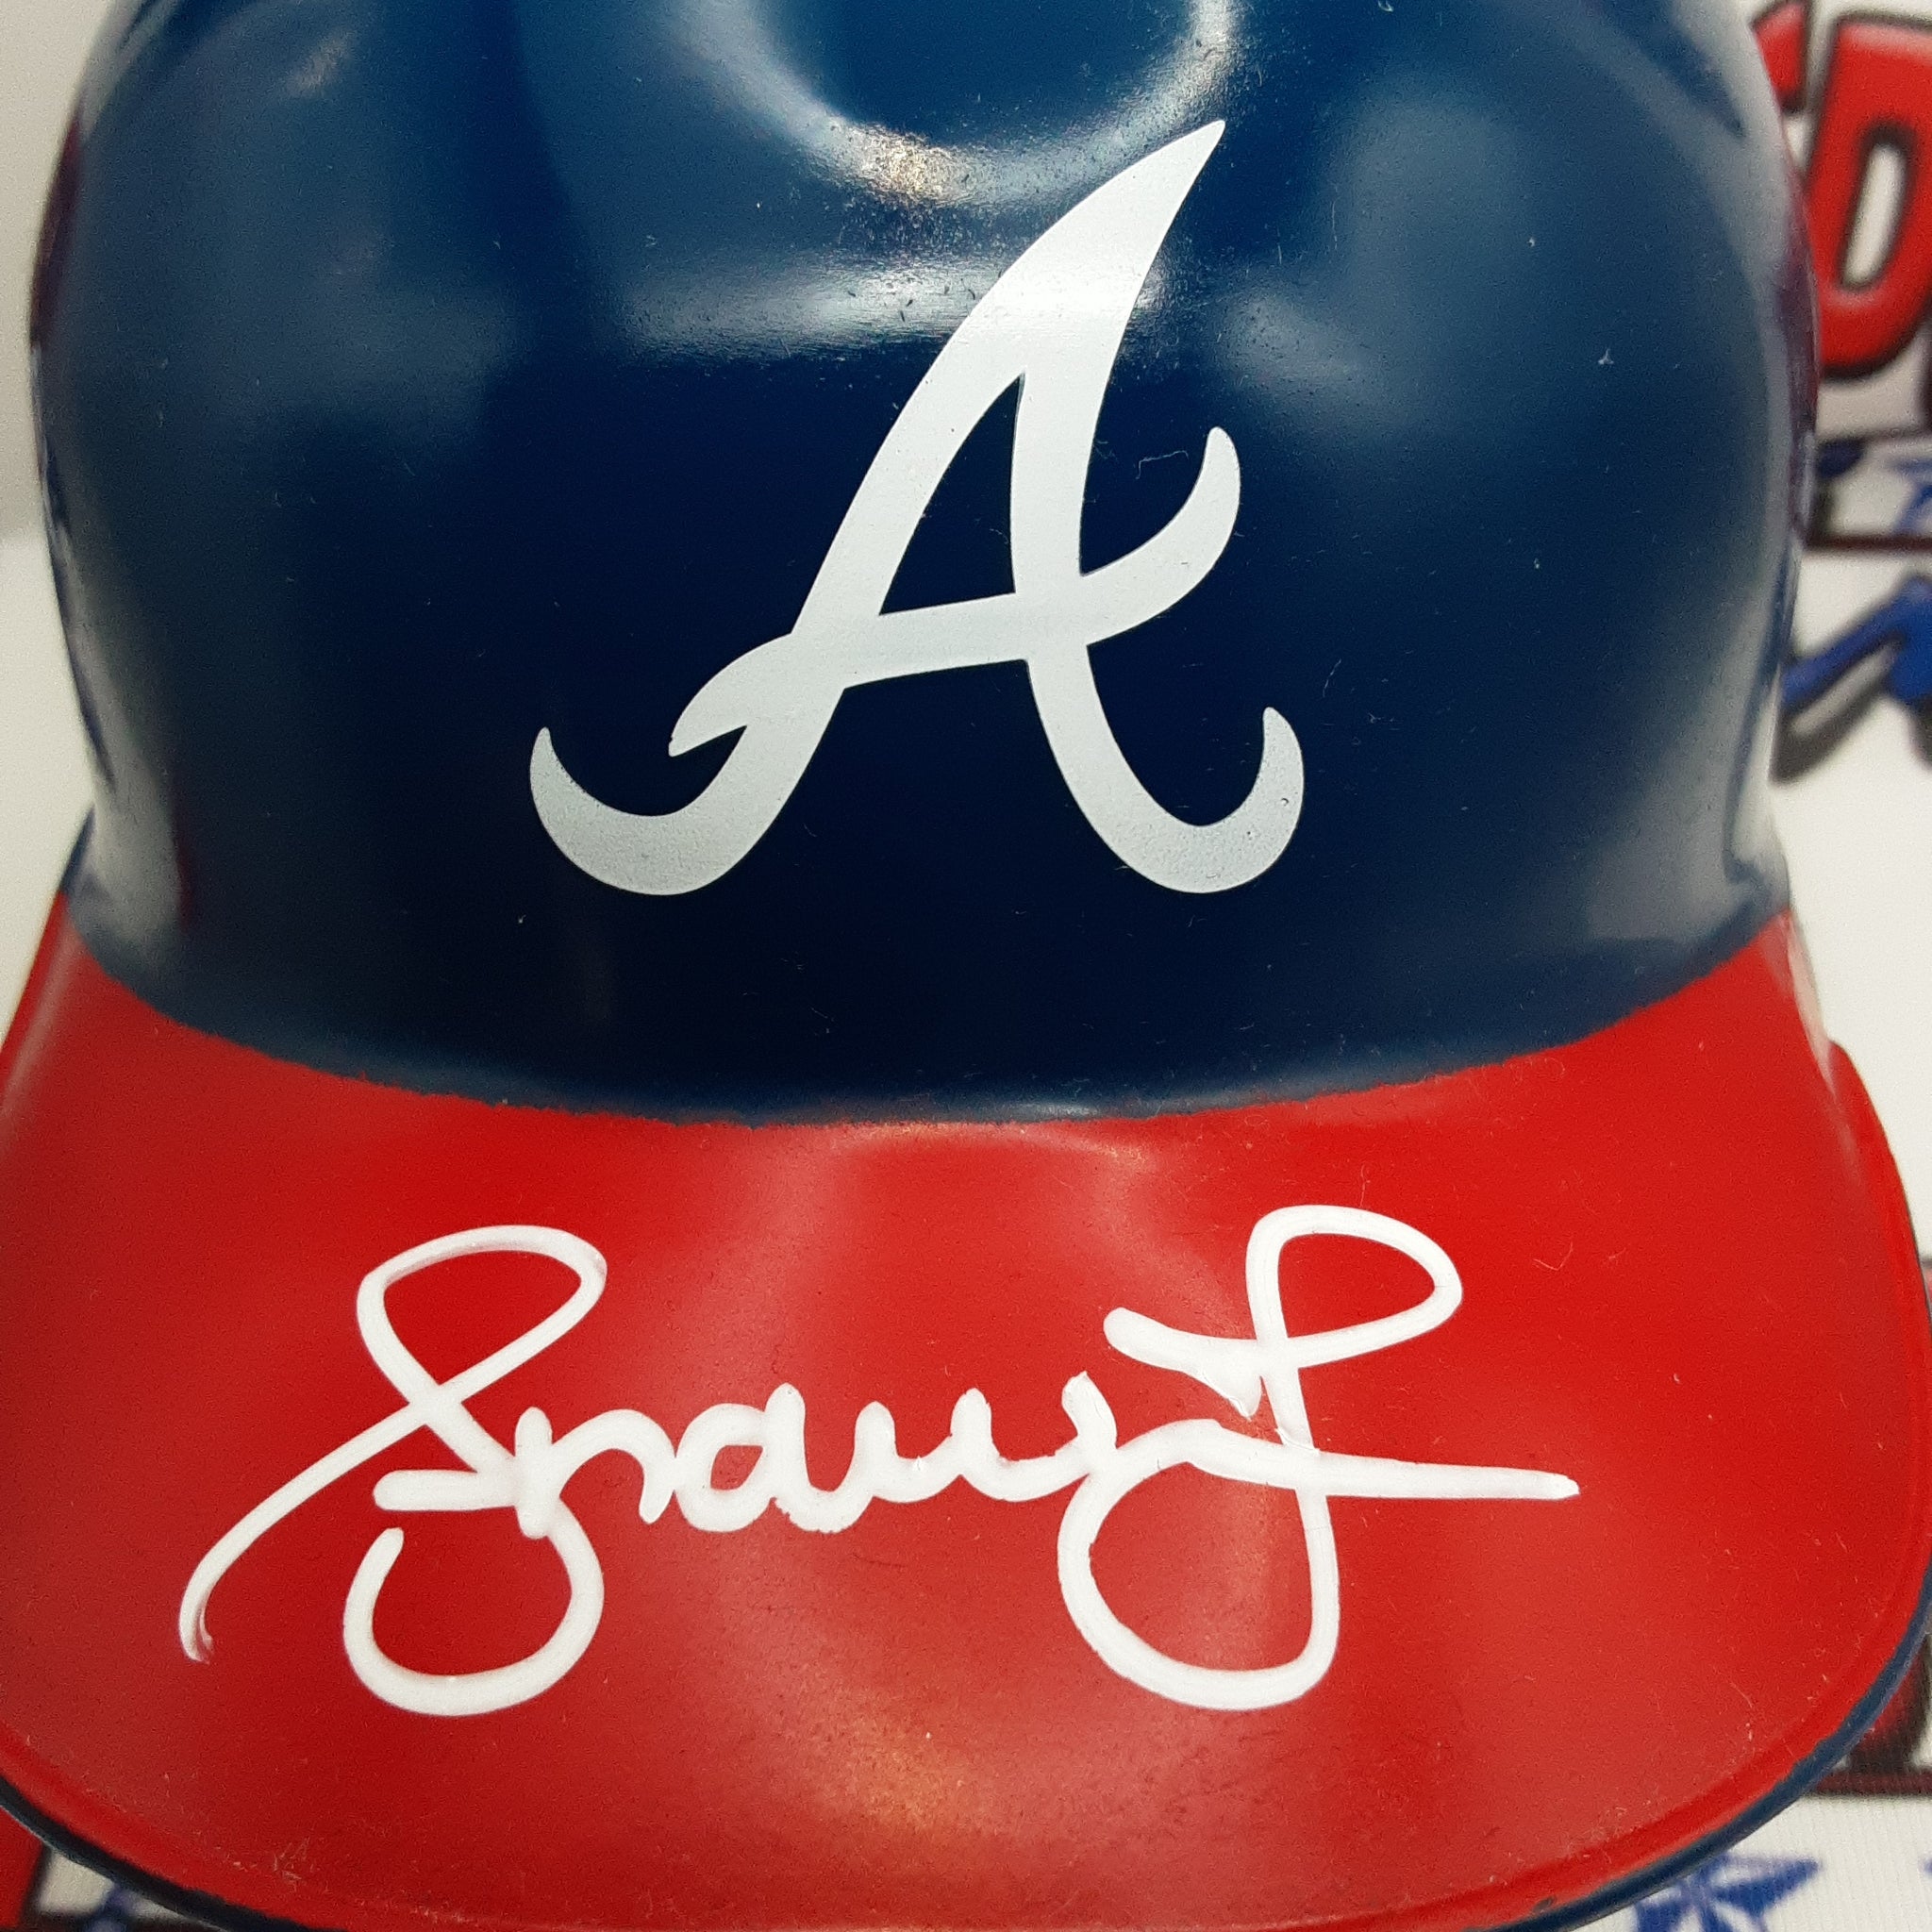 Andruw Jones Signed Autographed Atlanta Blue Baseball Jersey 